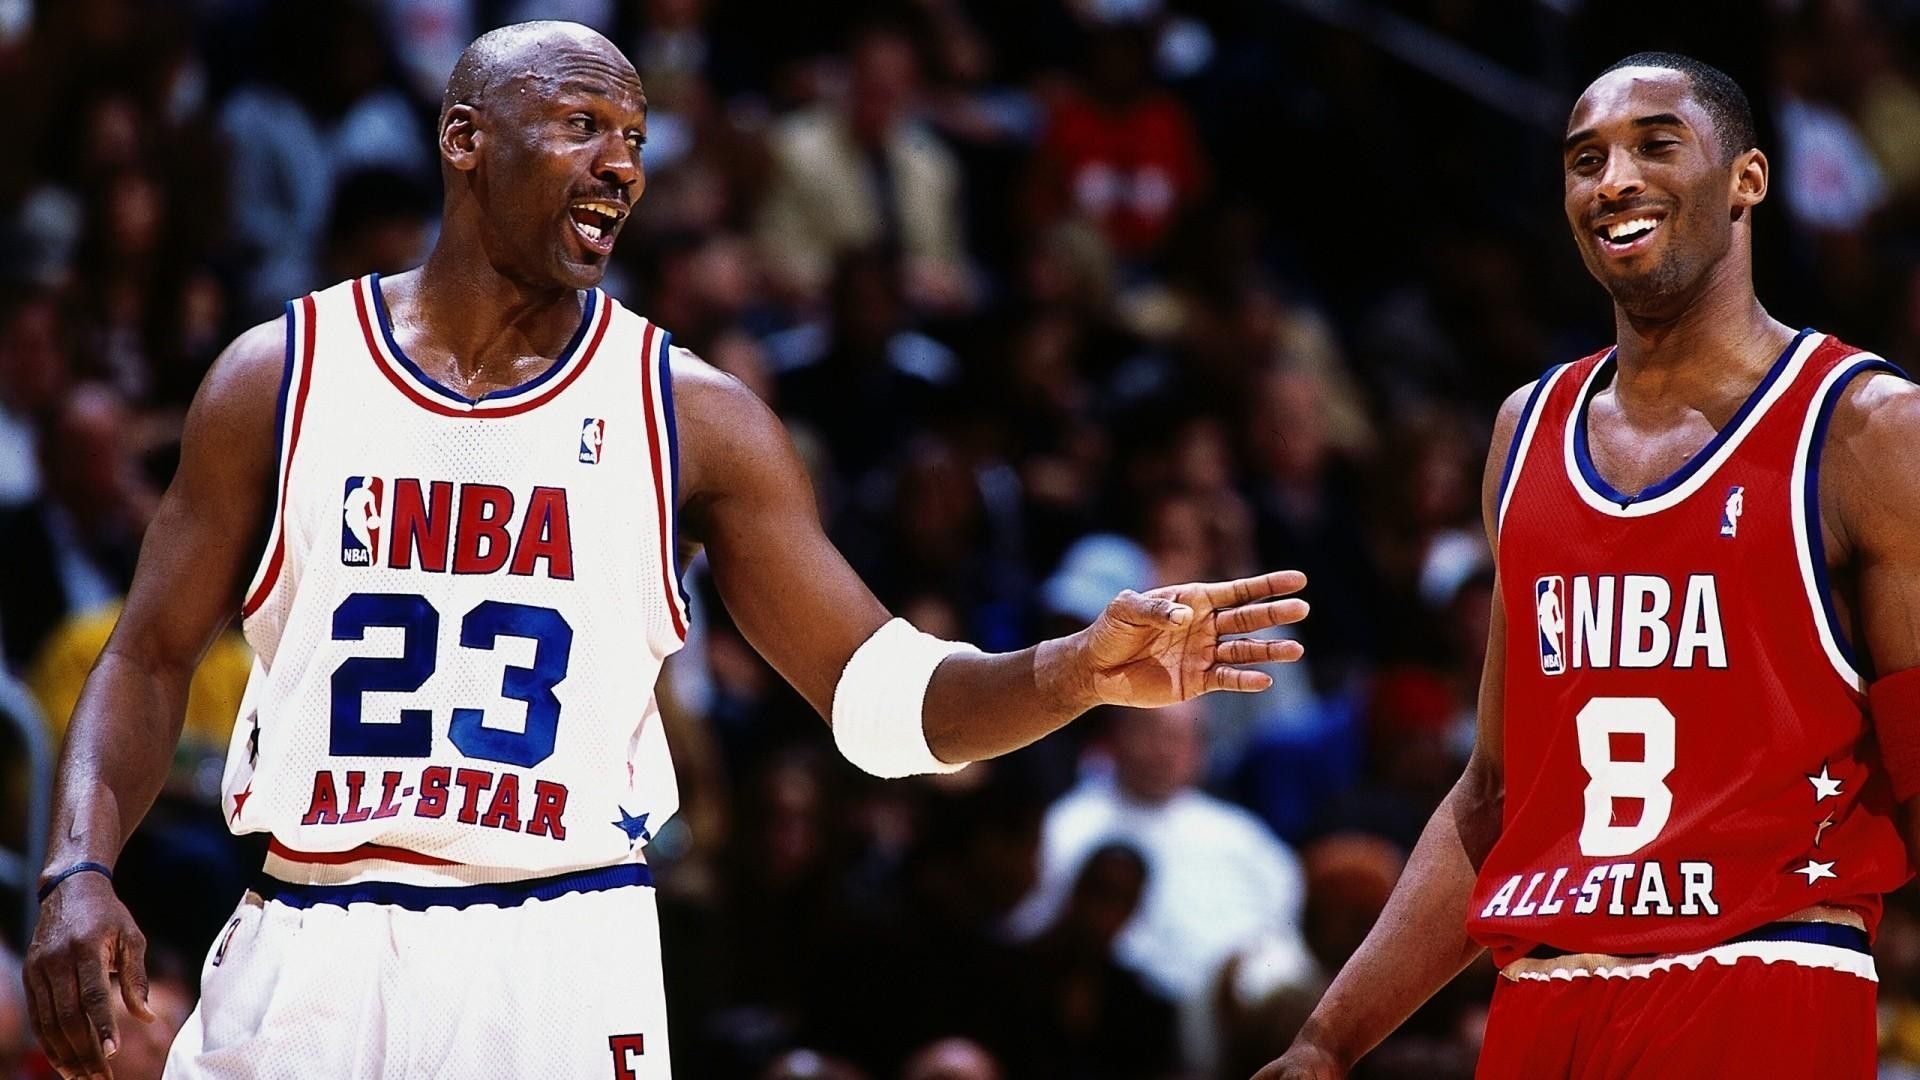 basketball, Michael Jordan, Kobe Bryant, Smiling, Sports, All Star